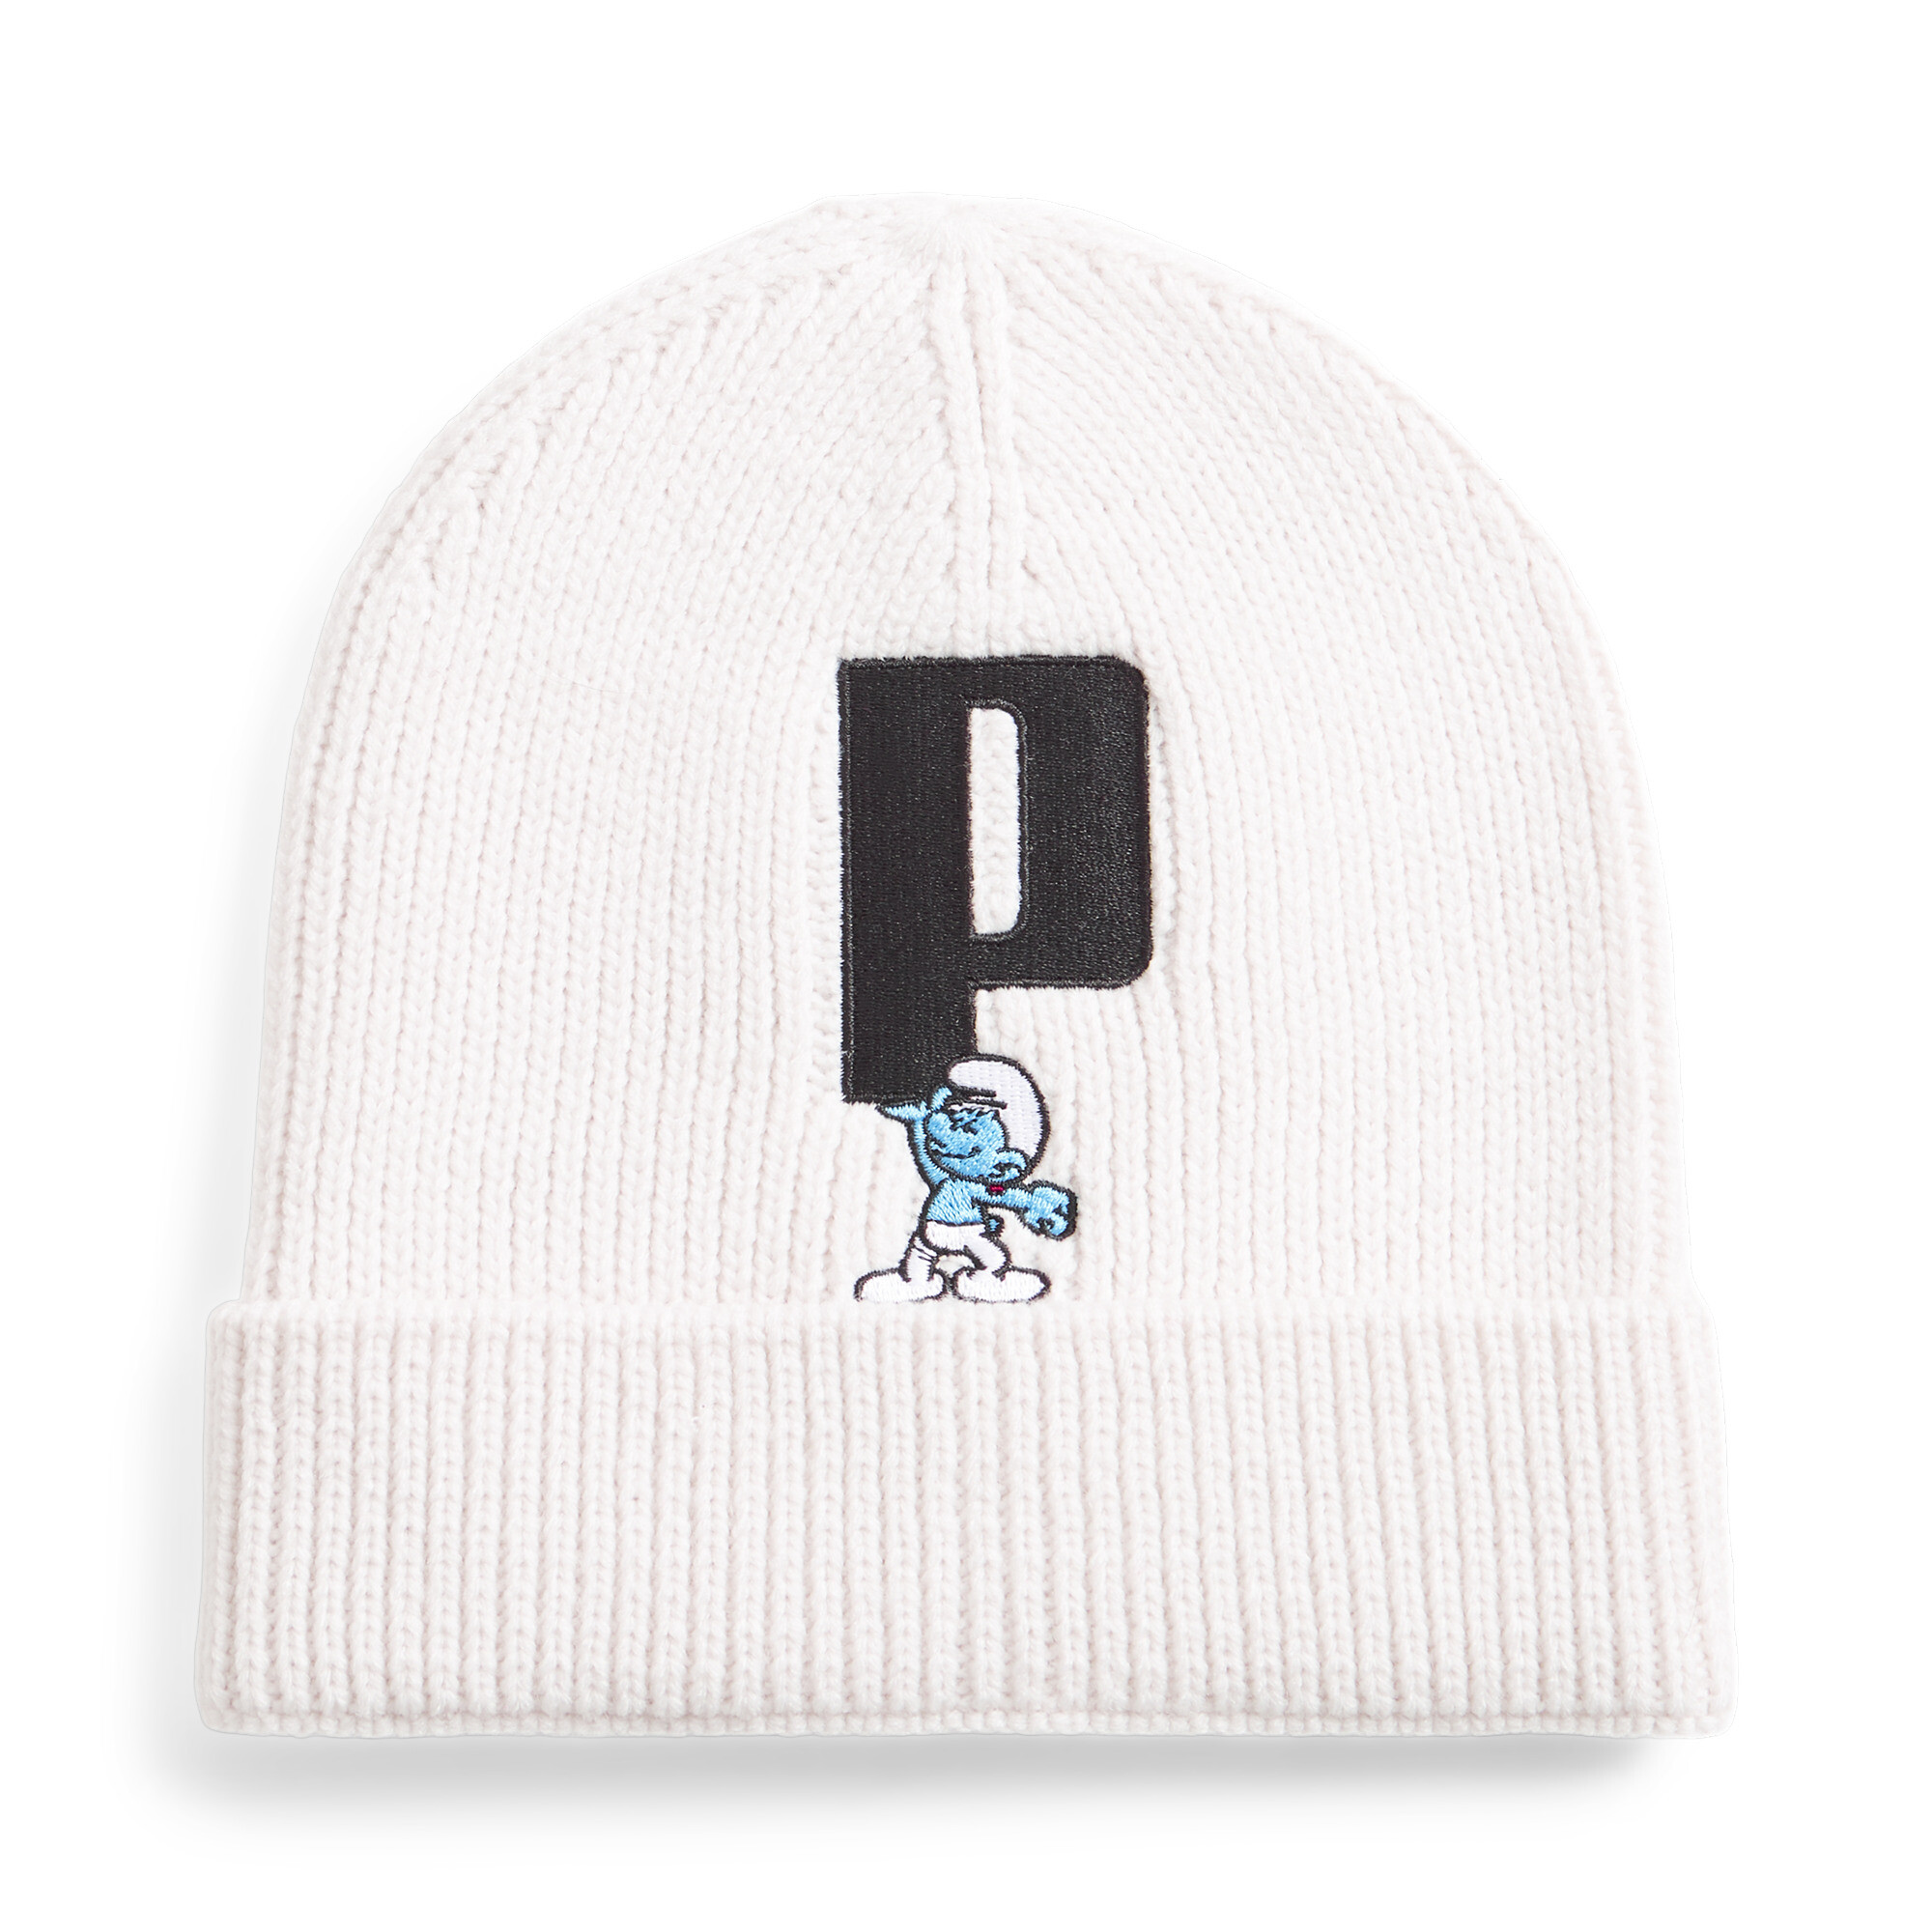 Puma X THE SMURFS Youth Beanie Hat, White, Accessories